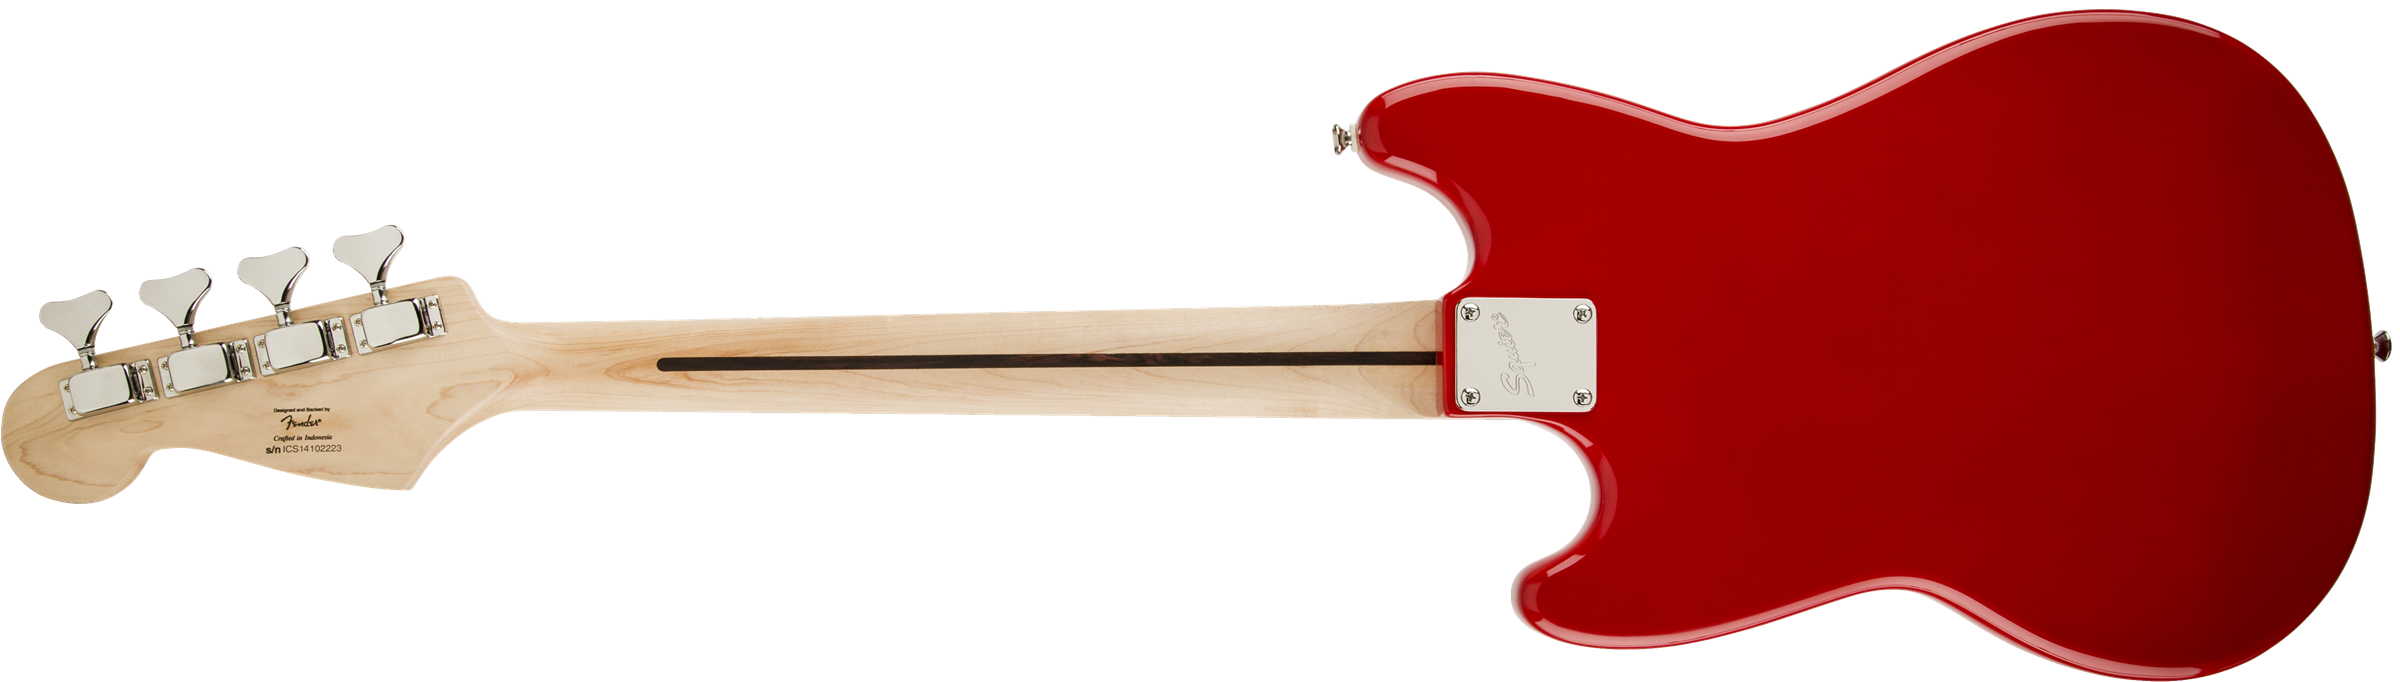 Squier Bronco Bass Mn - Torino Red - Bajo eléctrico para niños - Variation 1